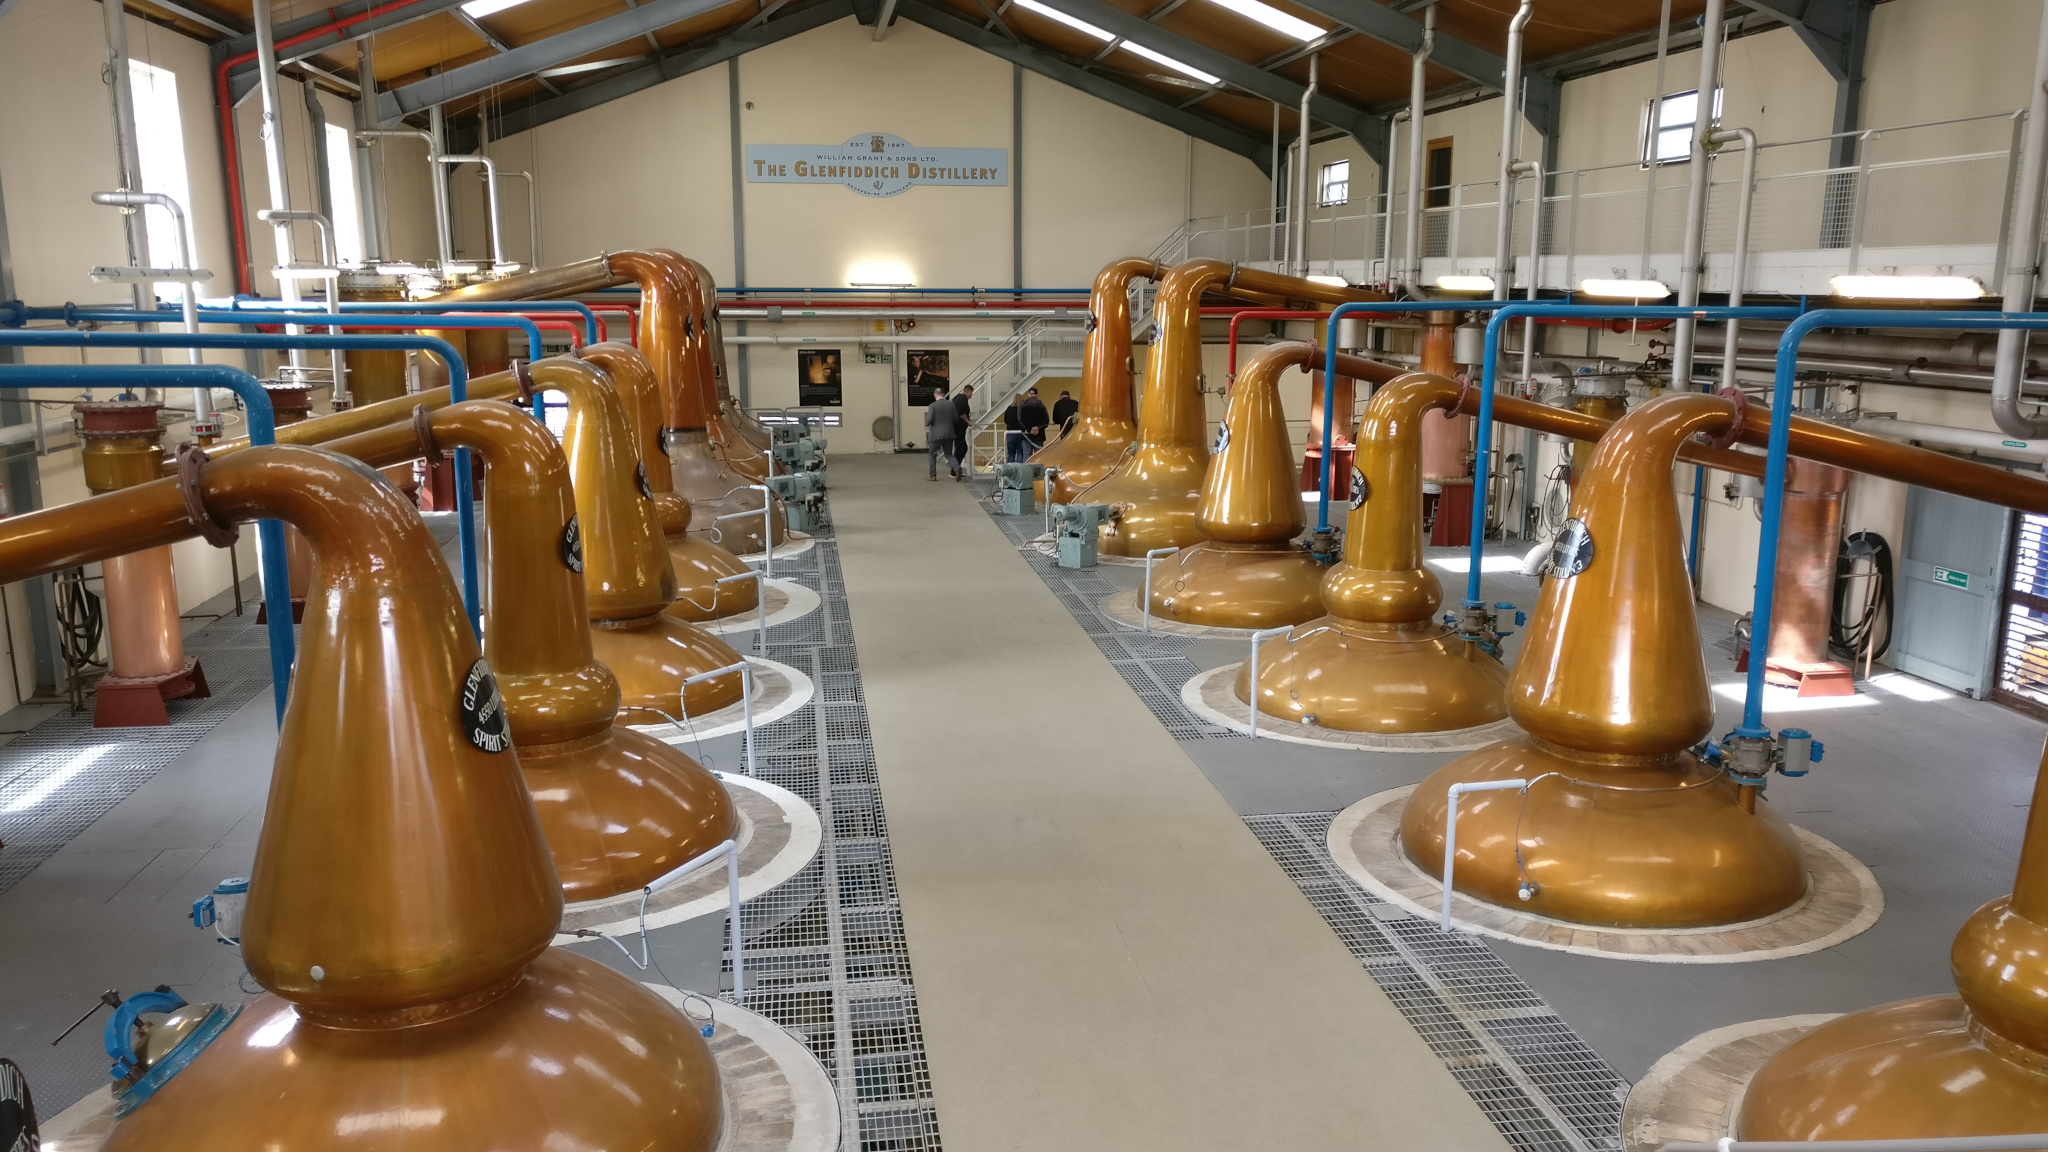 The beautiful copper stills of the Glenfiddich Distillery